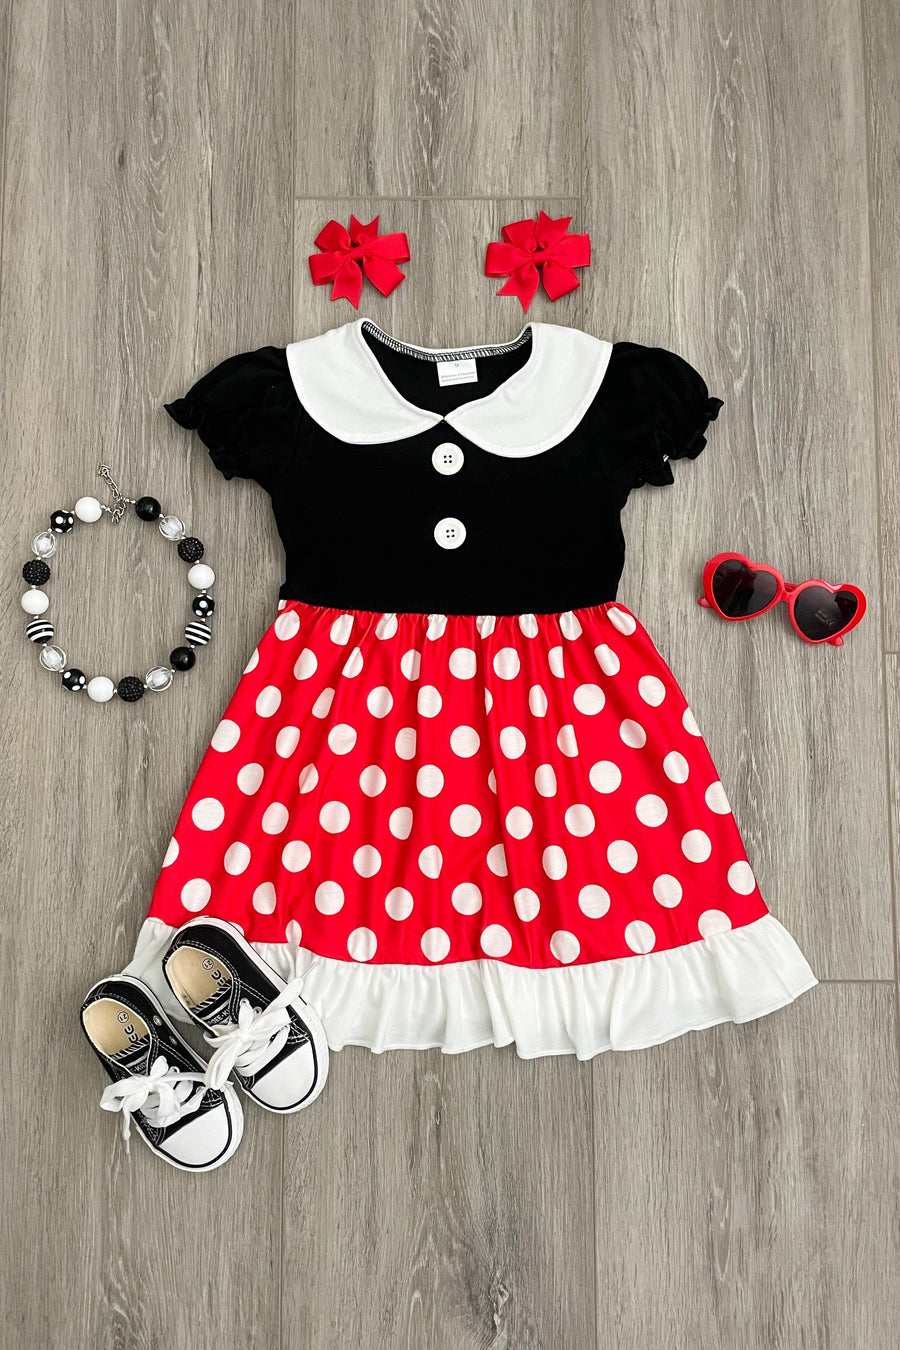 Red/Black Polka Dot Boutique Dress - Rylee Faith Designs